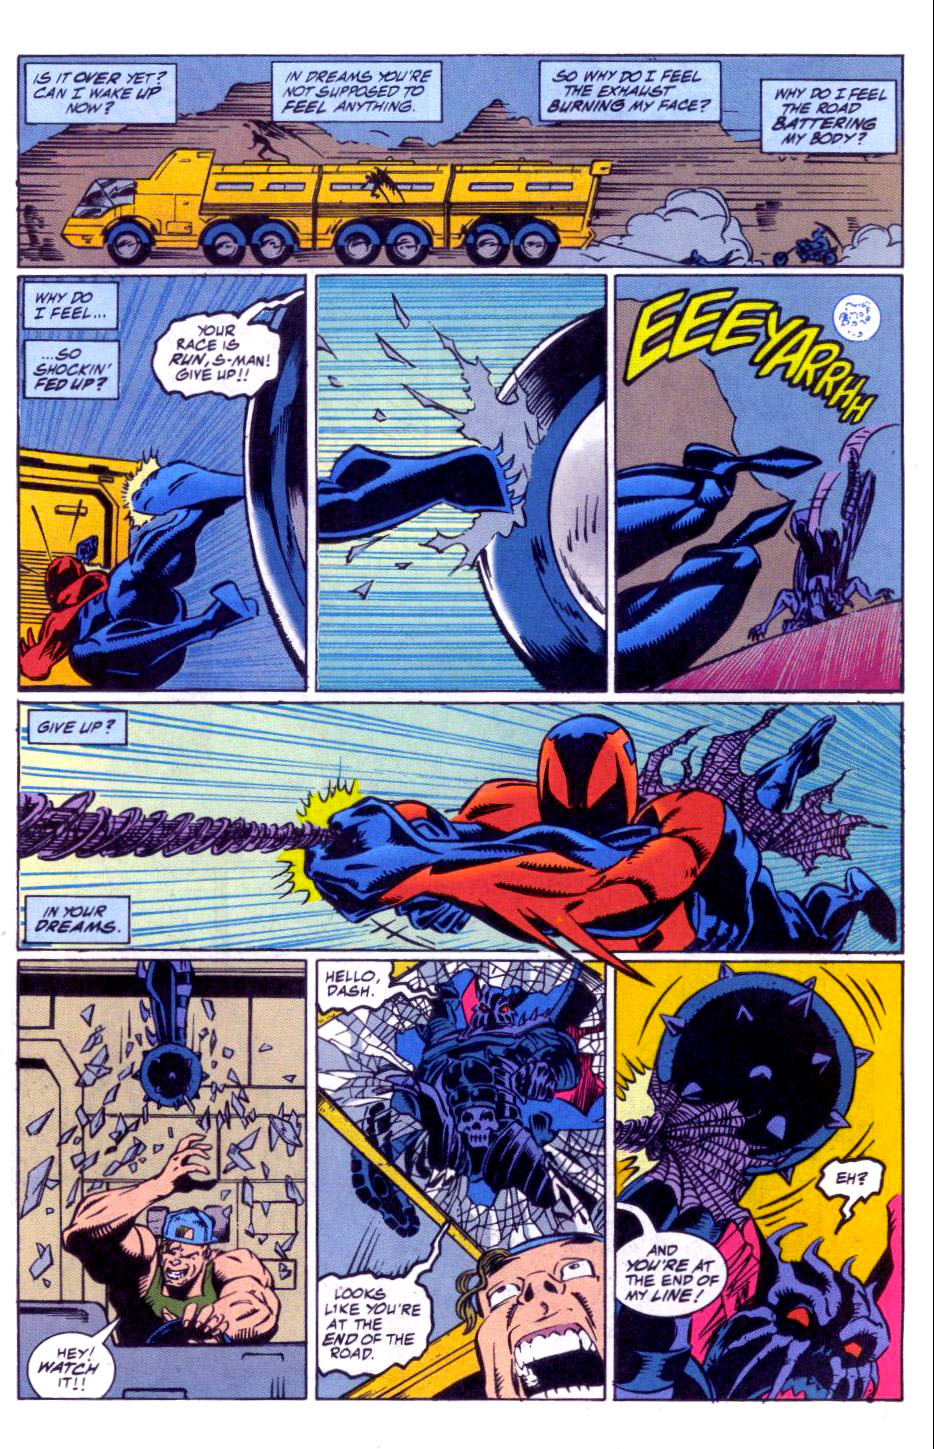 Spider-Man 2099 (1992) issue 31 - Page 16